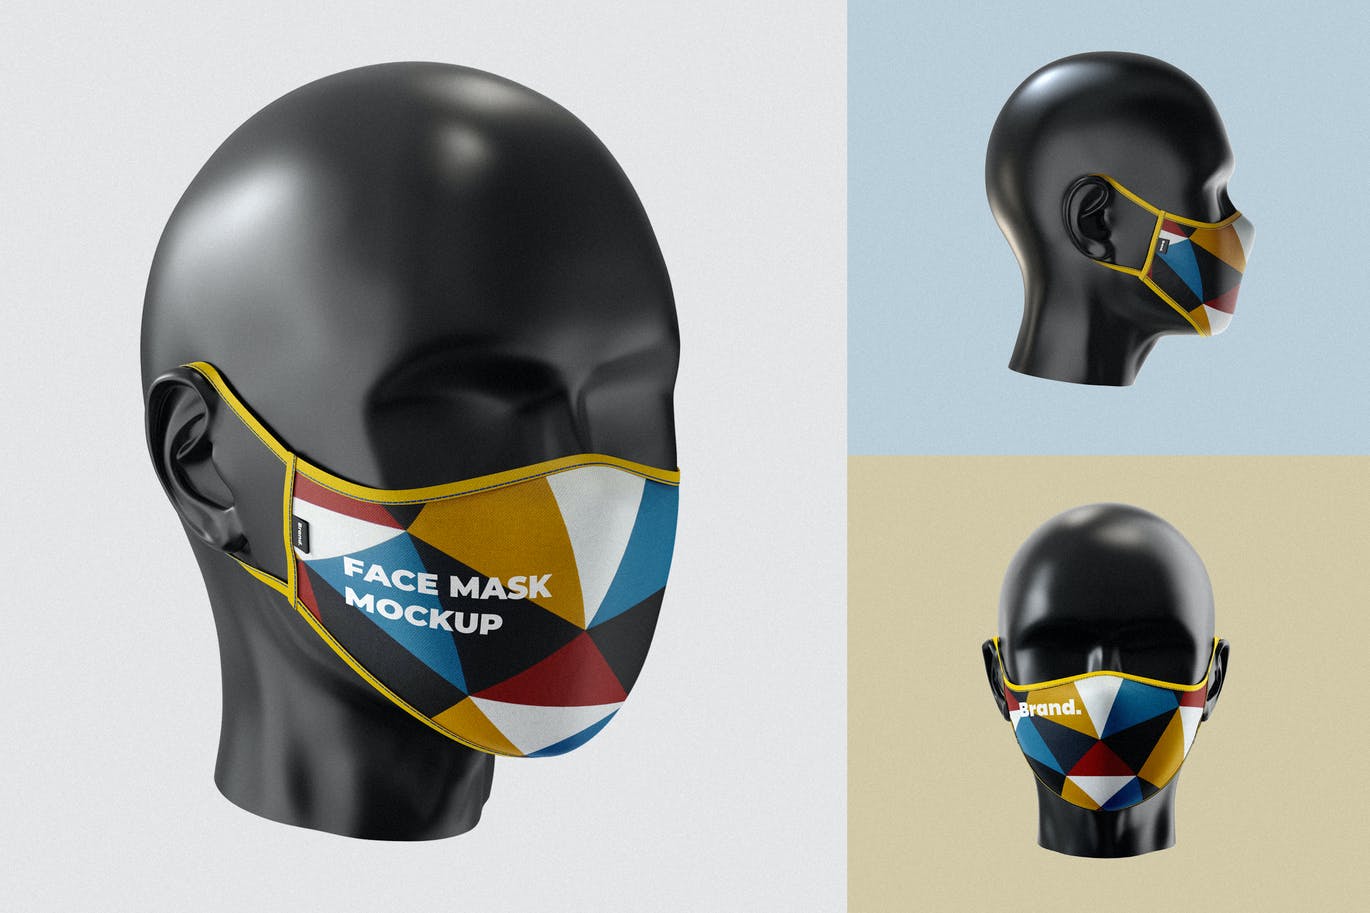 Face mask on mannequin head mockup